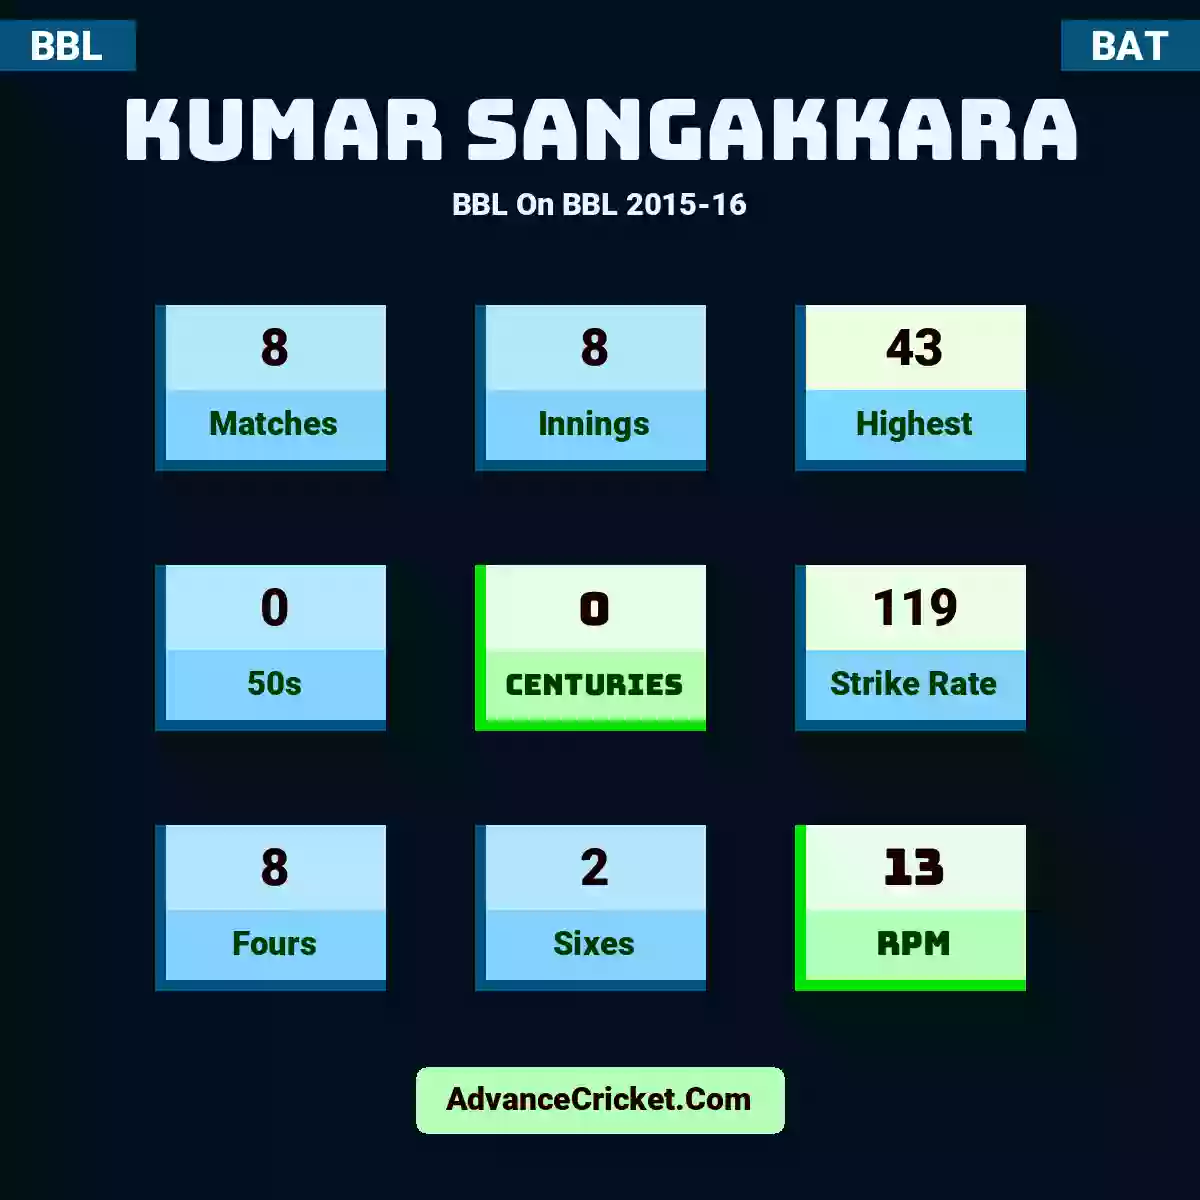 Kumar Sangakkara BBL  On BBL 2015-16, Kumar Sangakkara played 8 matches, scored 43 runs as highest, 0 half-centuries, and 0 centuries, with a strike rate of 119. K.Sangakkara hit 8 fours and 2 sixes, with an RPM of 13.